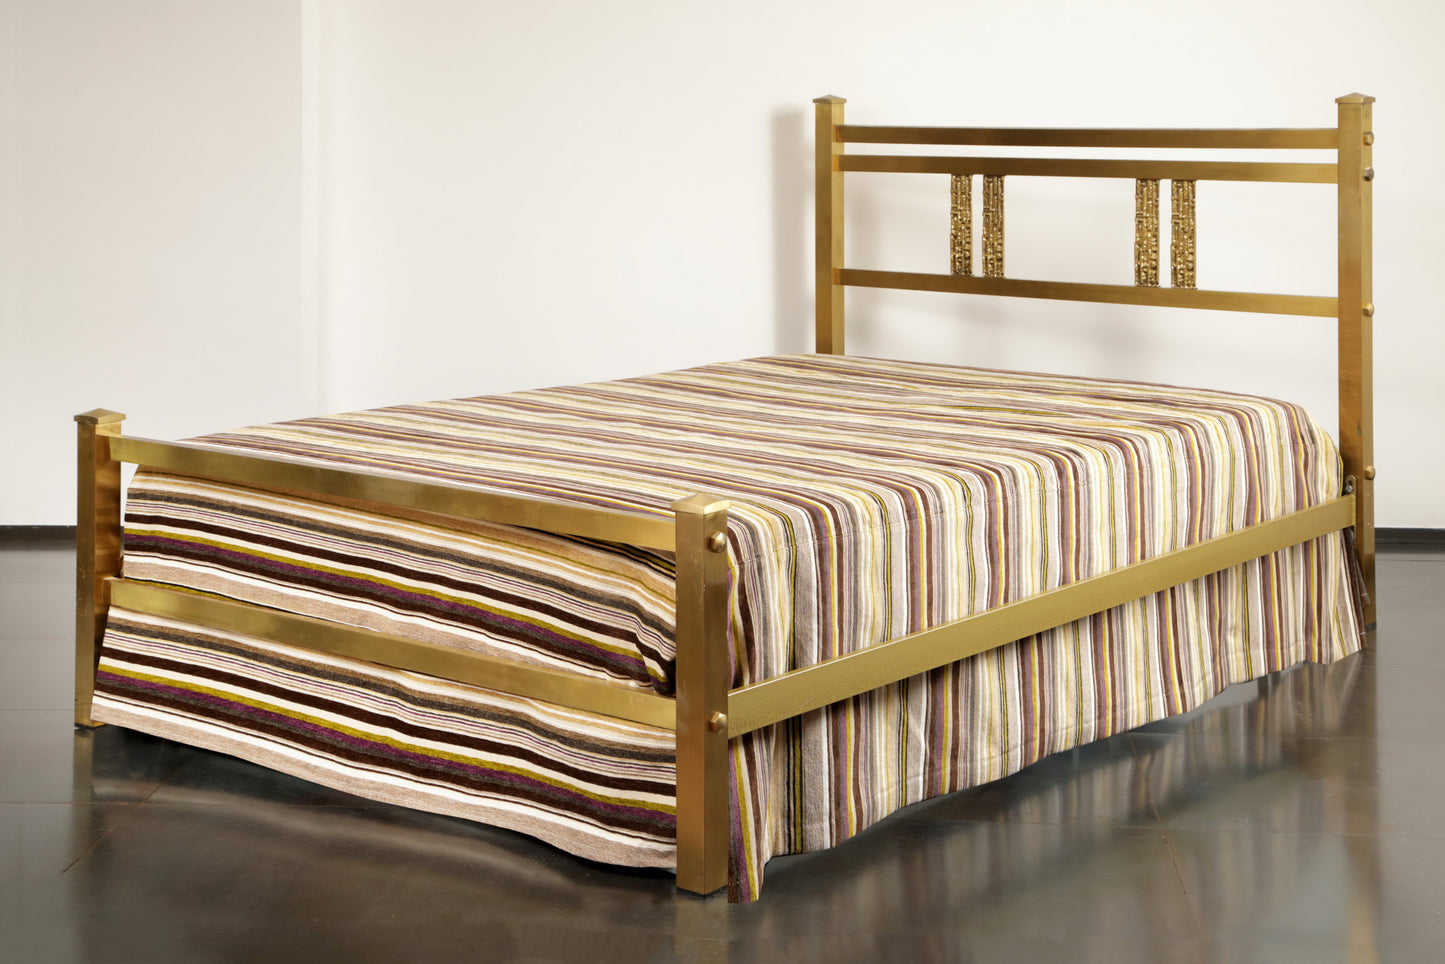 Striped velvet bedspread set